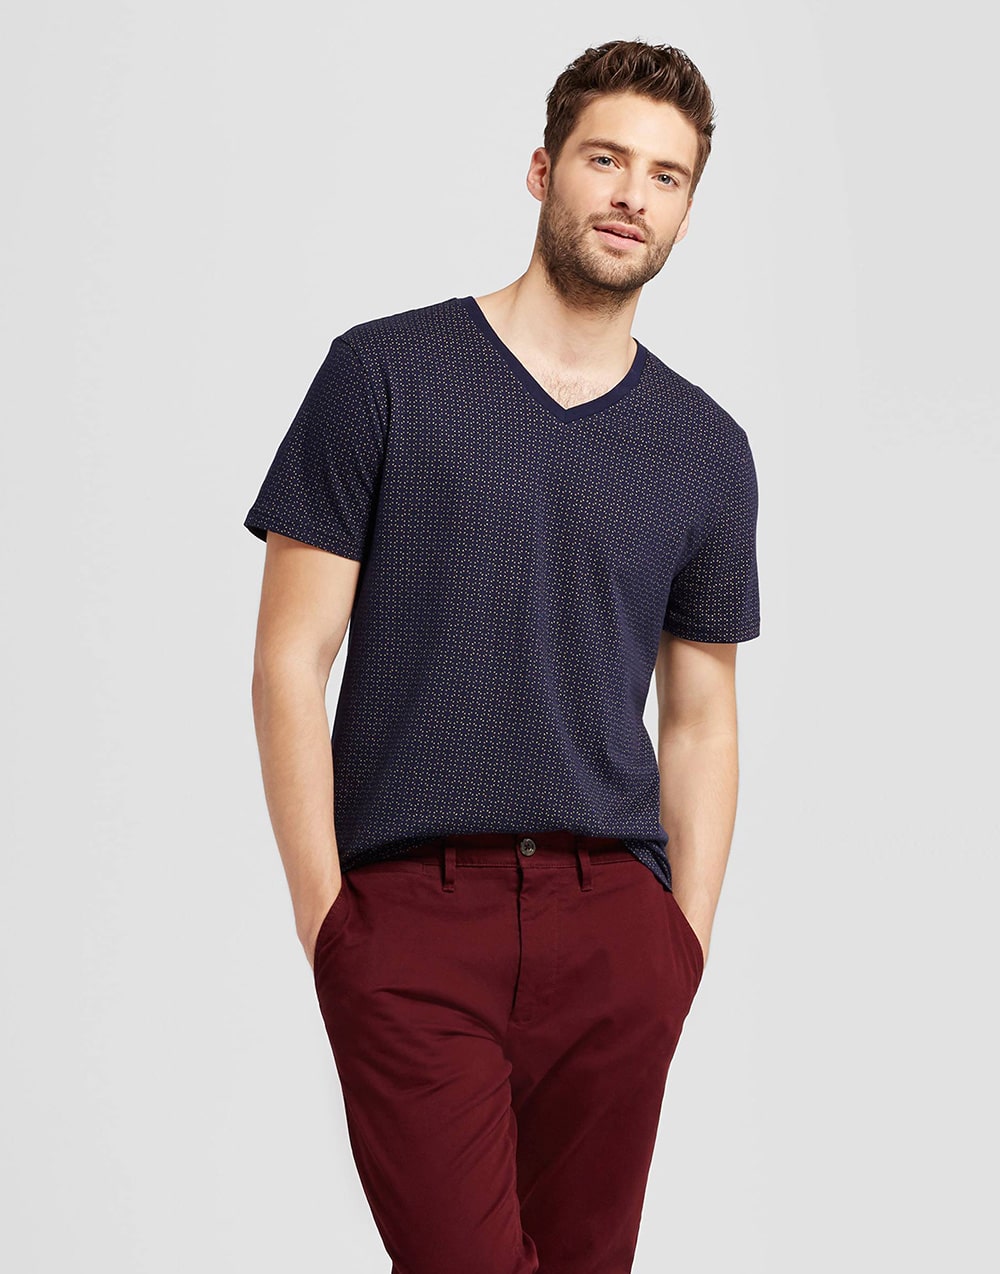 Mens-Standard-Fit-Short-Sleeve-V-Neck-T-Shirt01-1-min